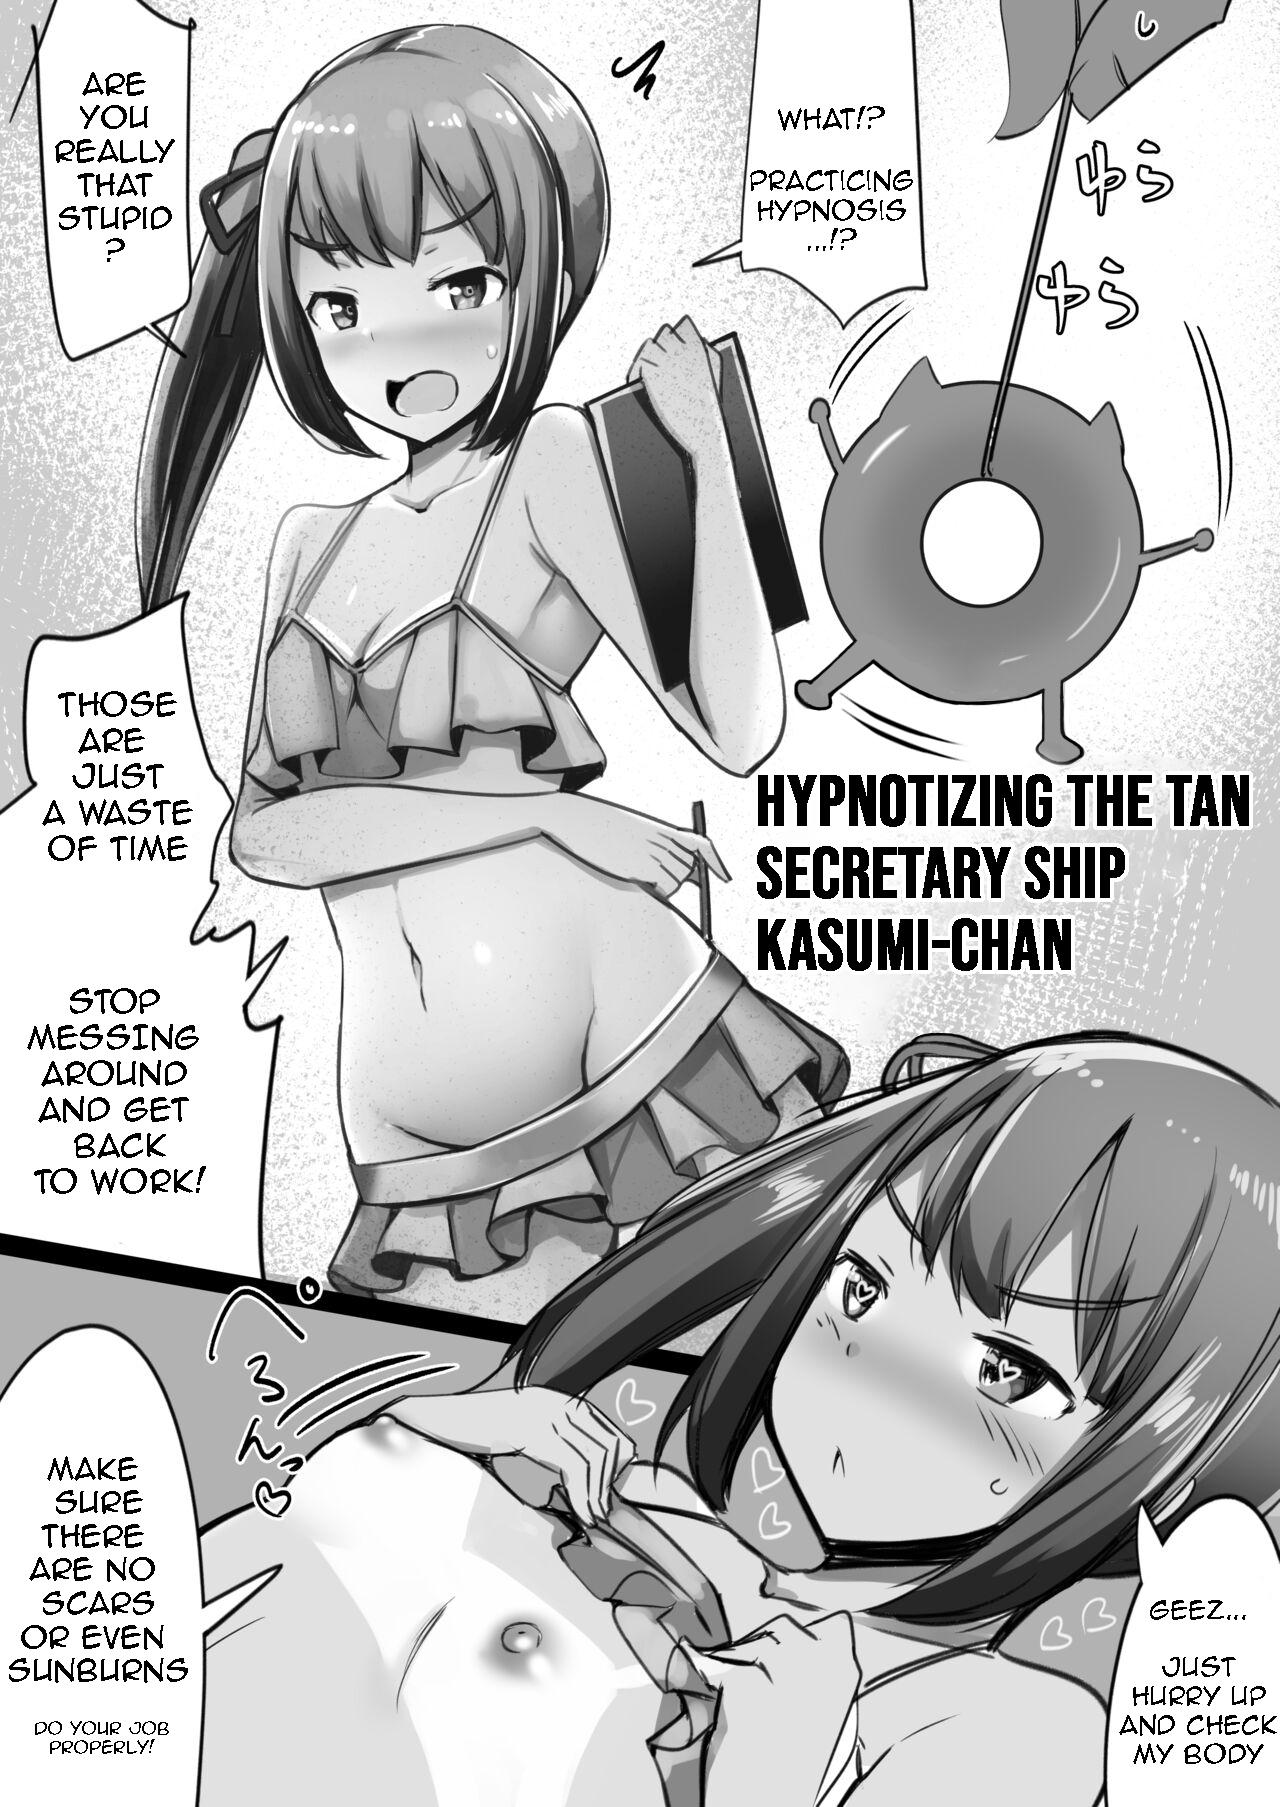 Hypnotizing the Tan Secretary Ship, Kasumi-Chan 0